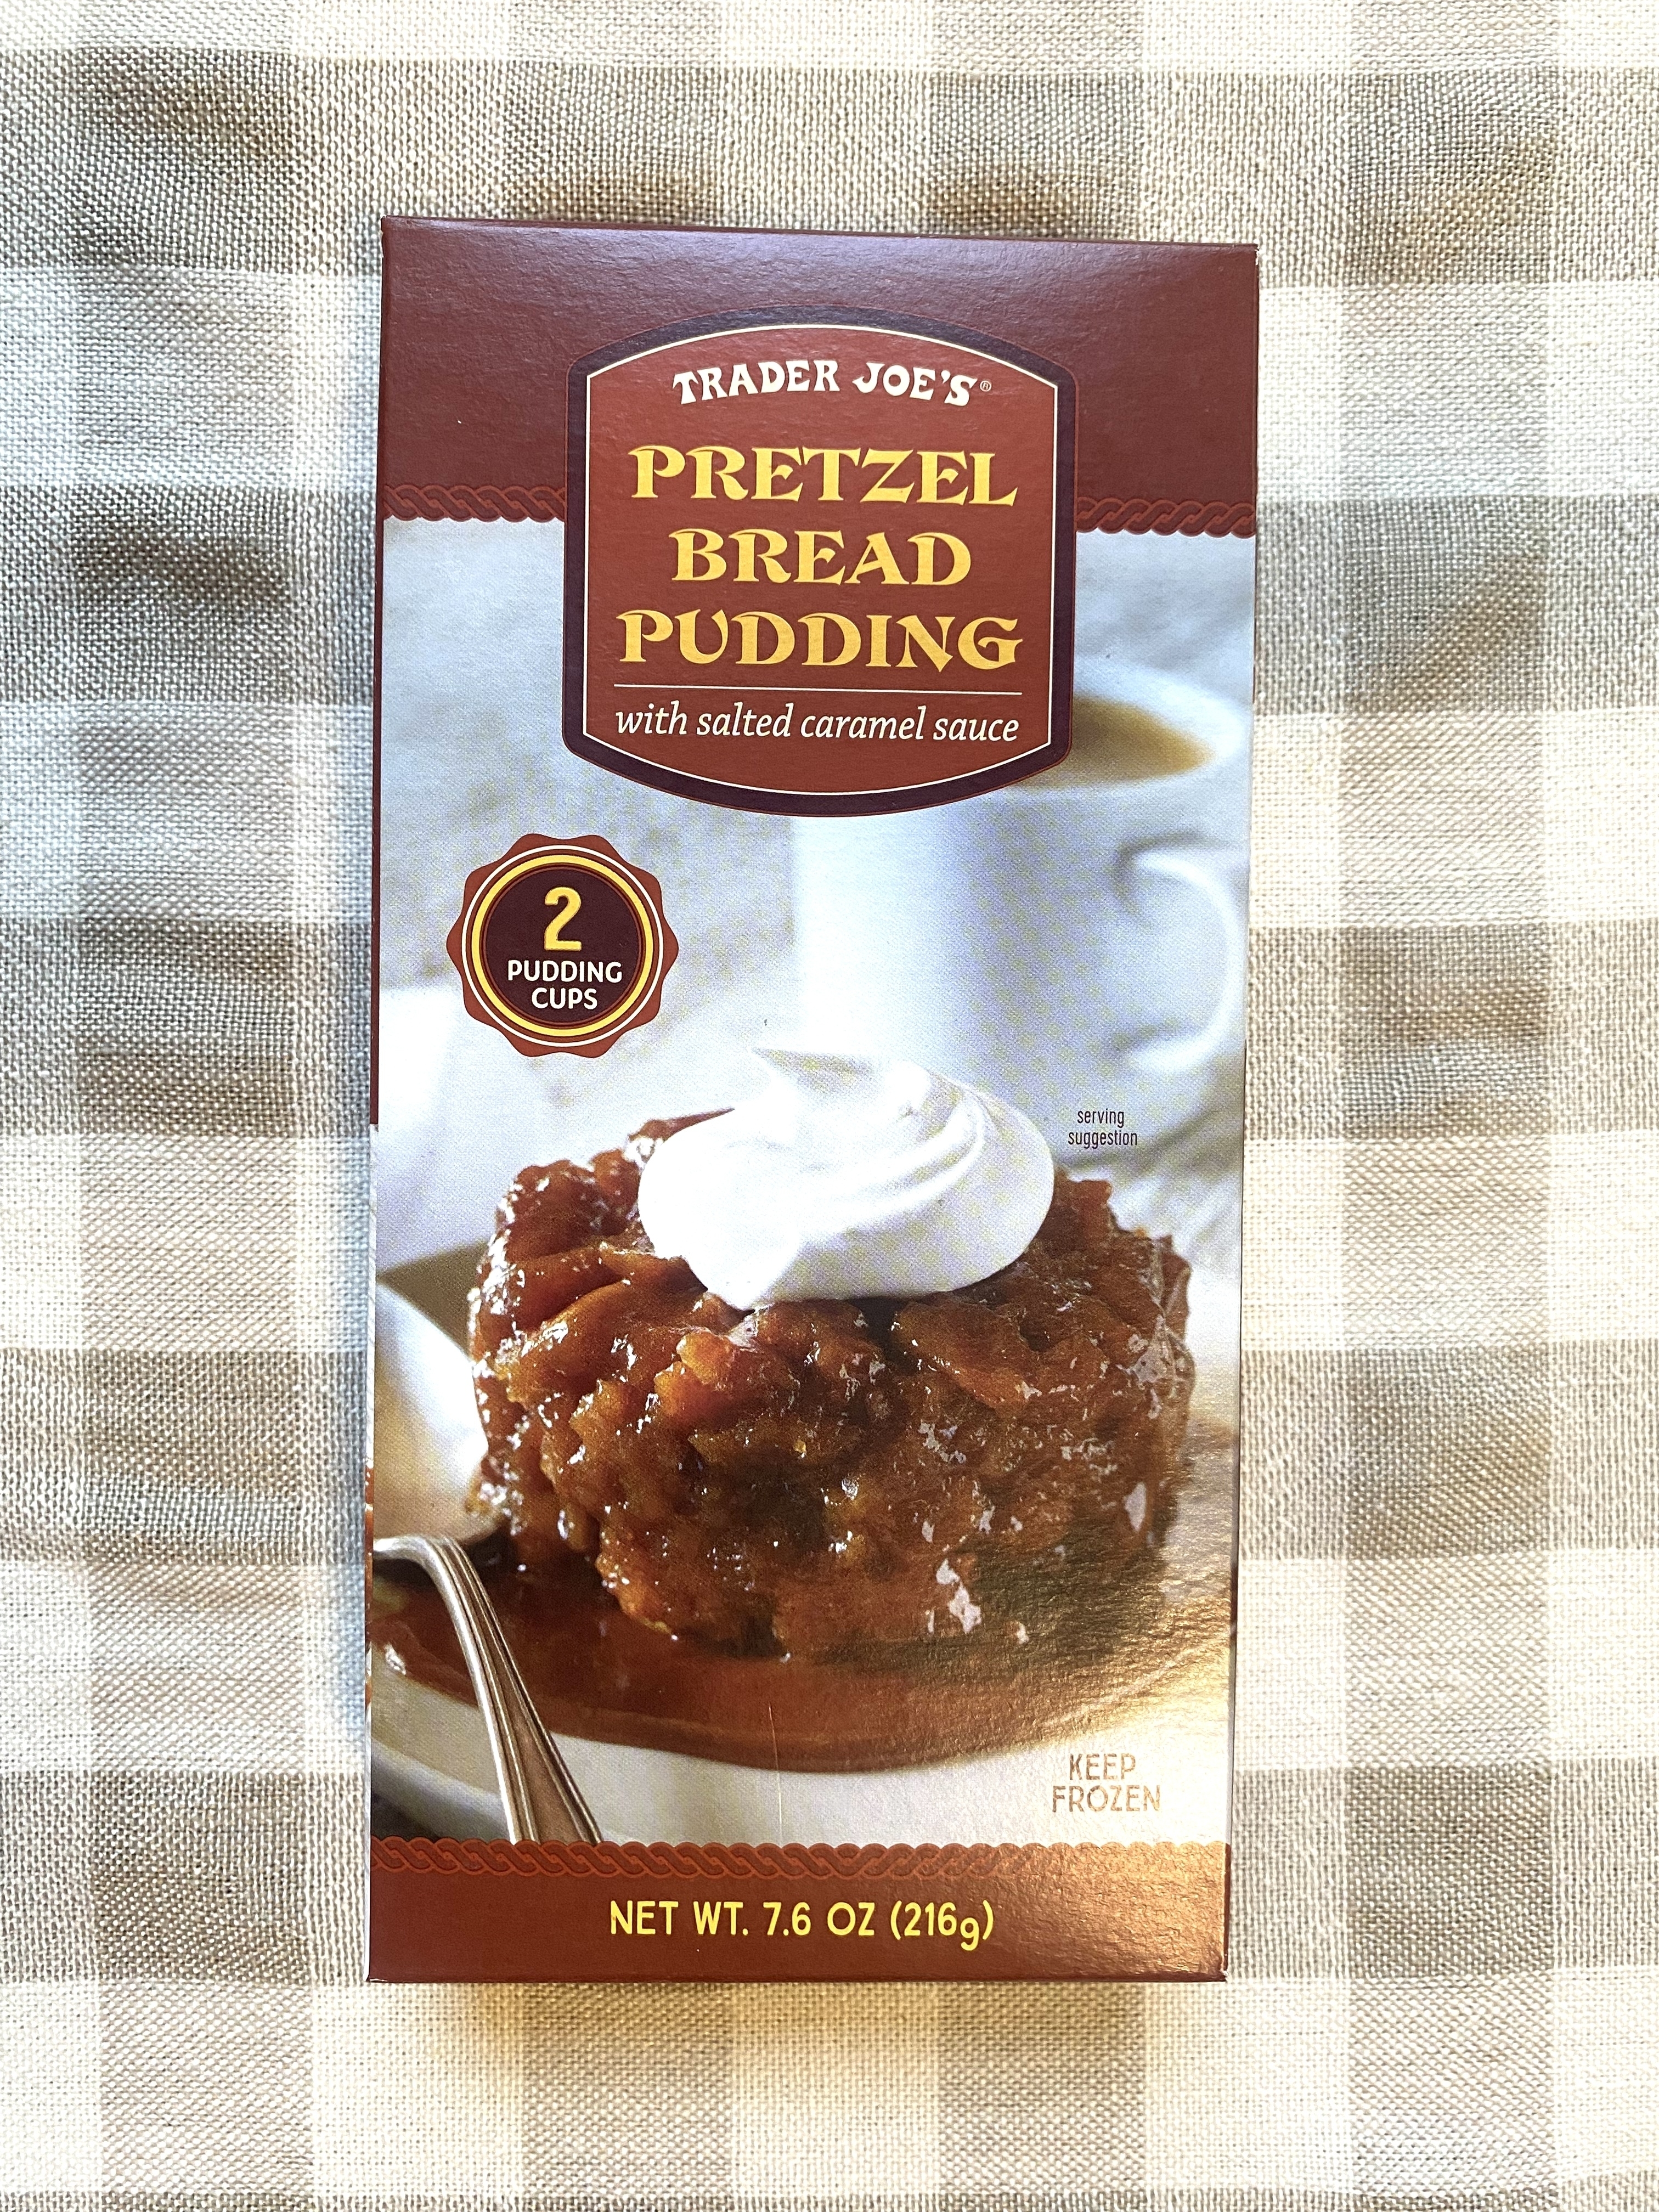 A box of Pretzel Bread Pudding from Trader Joe&#x27;s